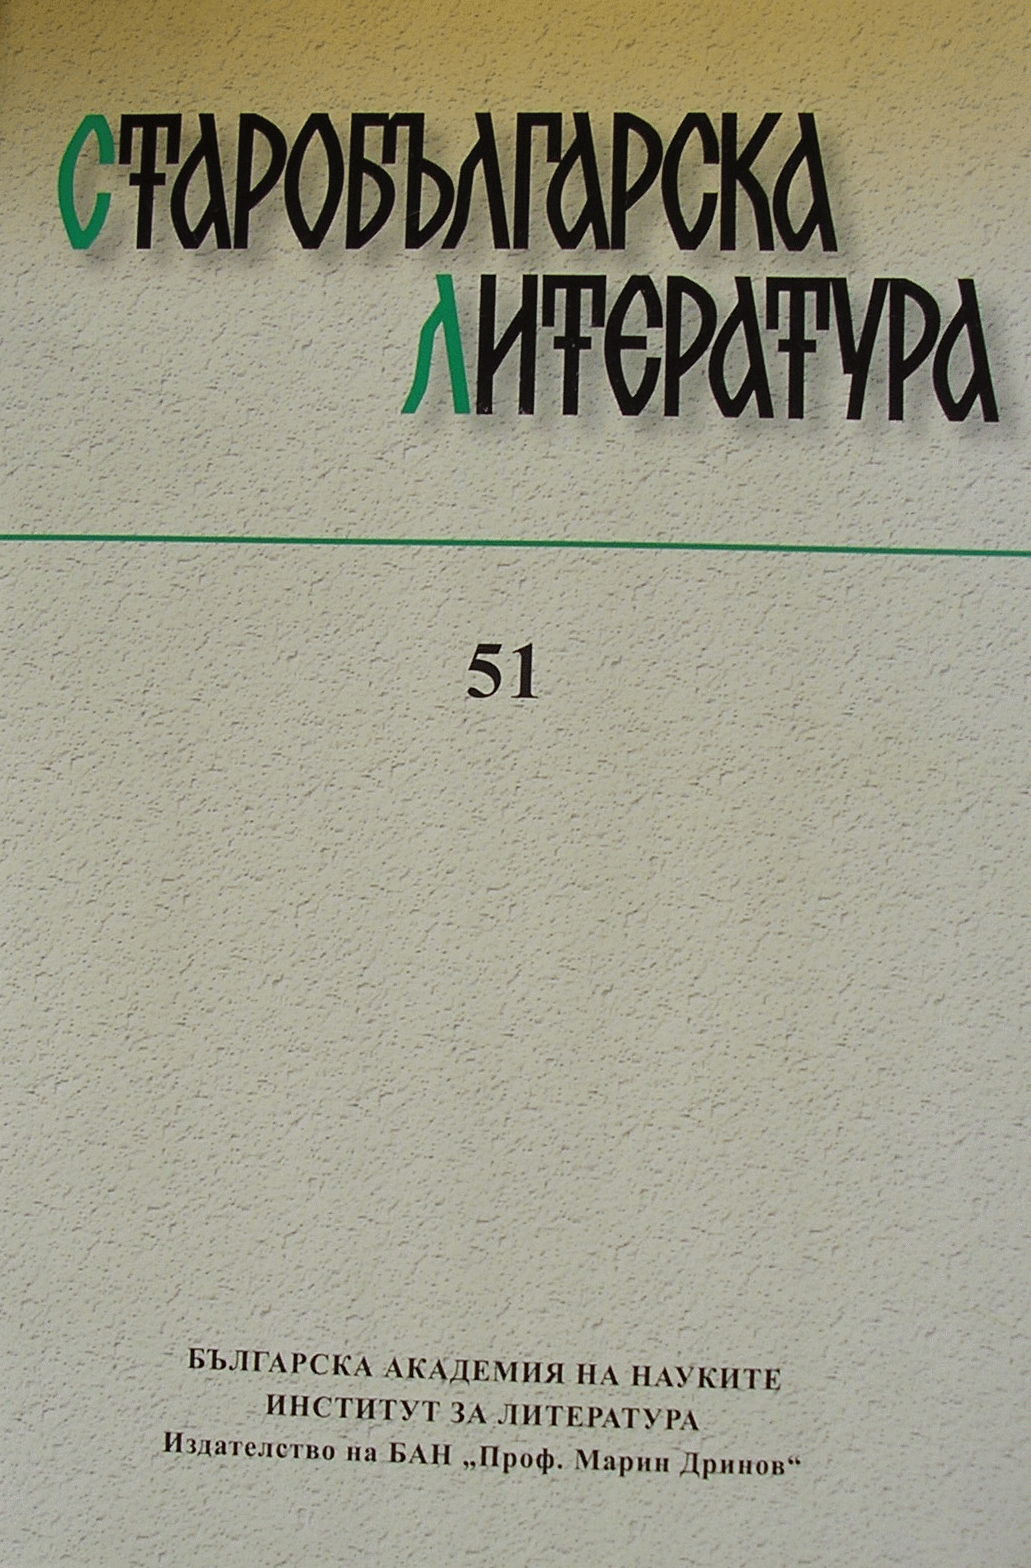 Vasja Velinova, Nina Vutova. Slavic Manuscripts, Cyrillic Printed Books and Periodicals. Vol. 1. Sofia: National Historical Museum, 2013. 456 p. ISBN 978- 954-2953-26-5 Cover Image